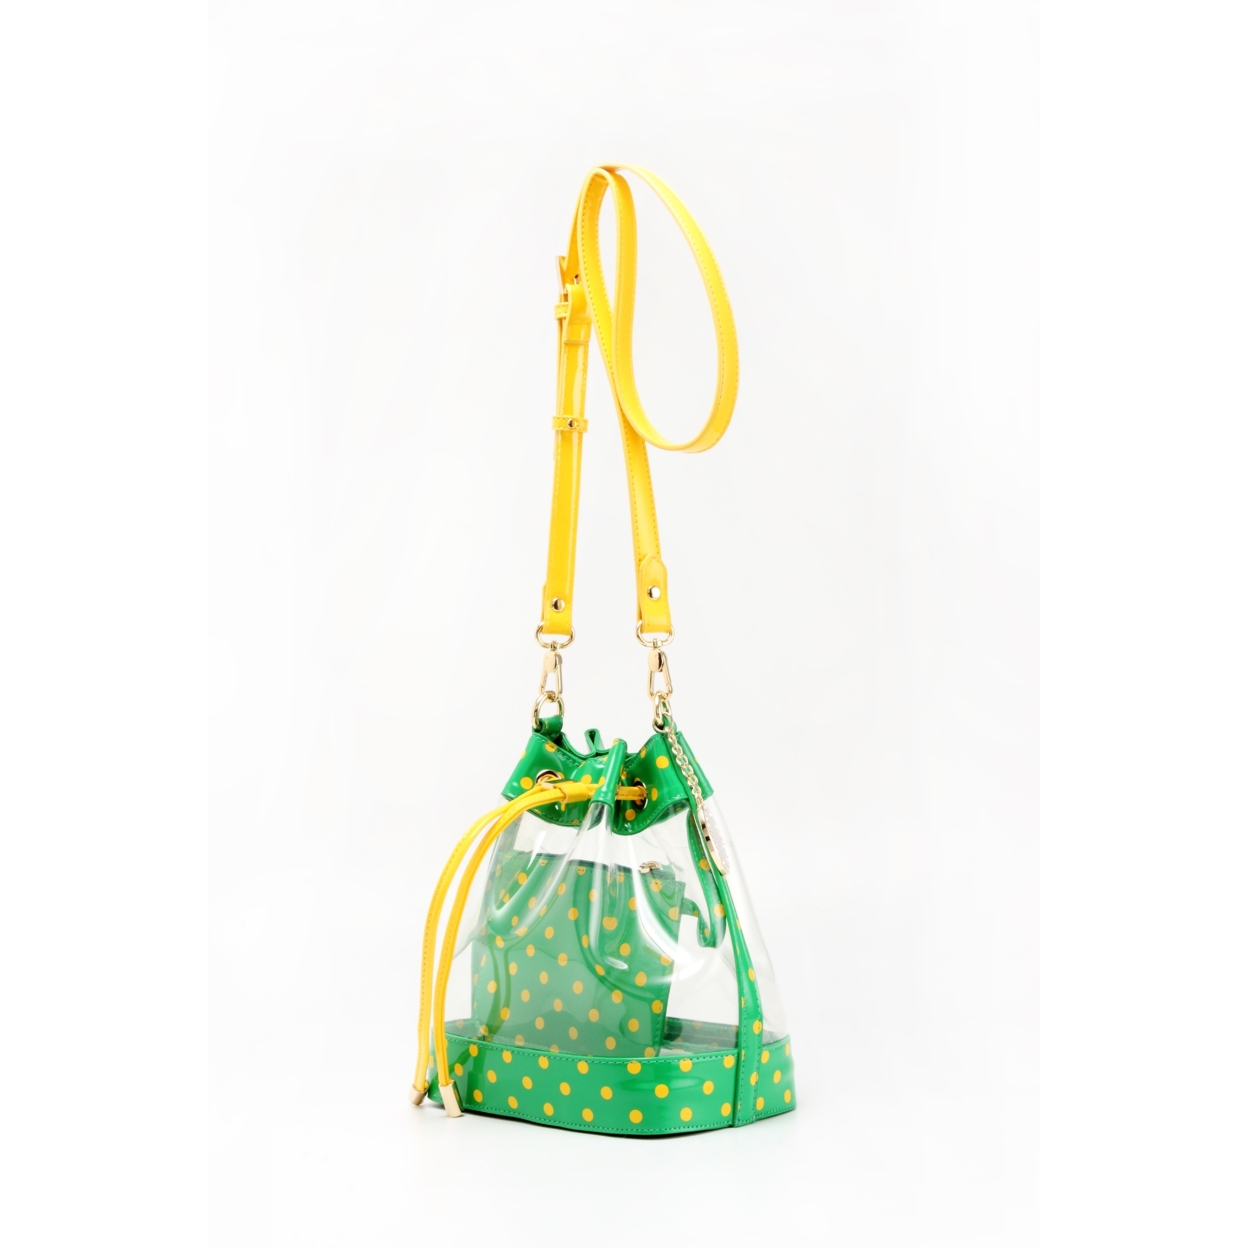 SCORE! Clear Sarah Jean Designer Crossbody Polka Dot Boho Bucket Bag-Bright Fern Green And Yellow Gold